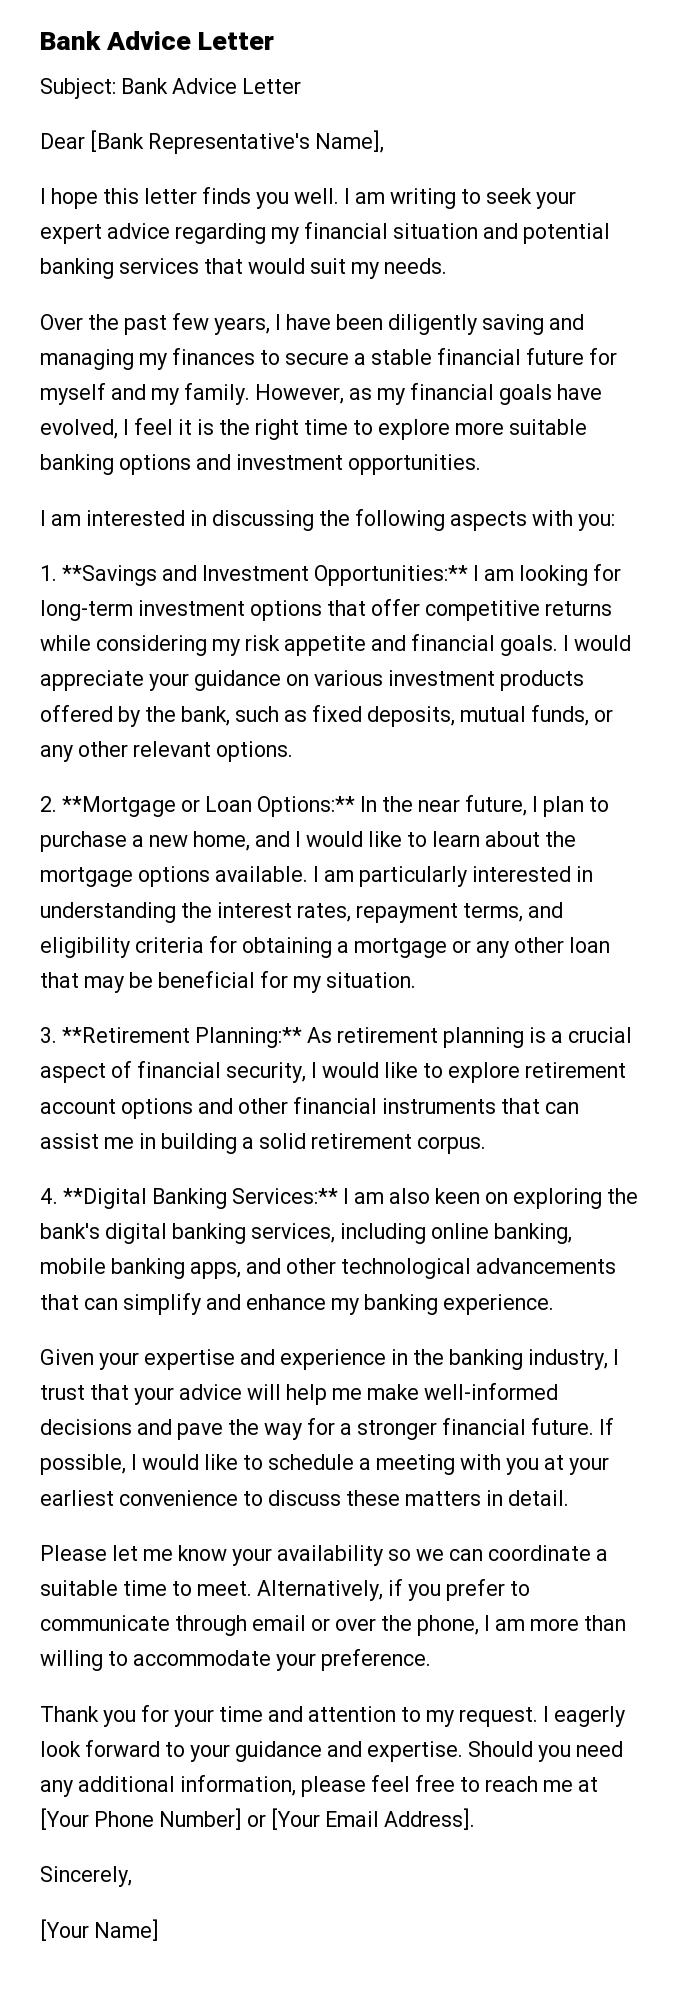 Bank Advice Letter